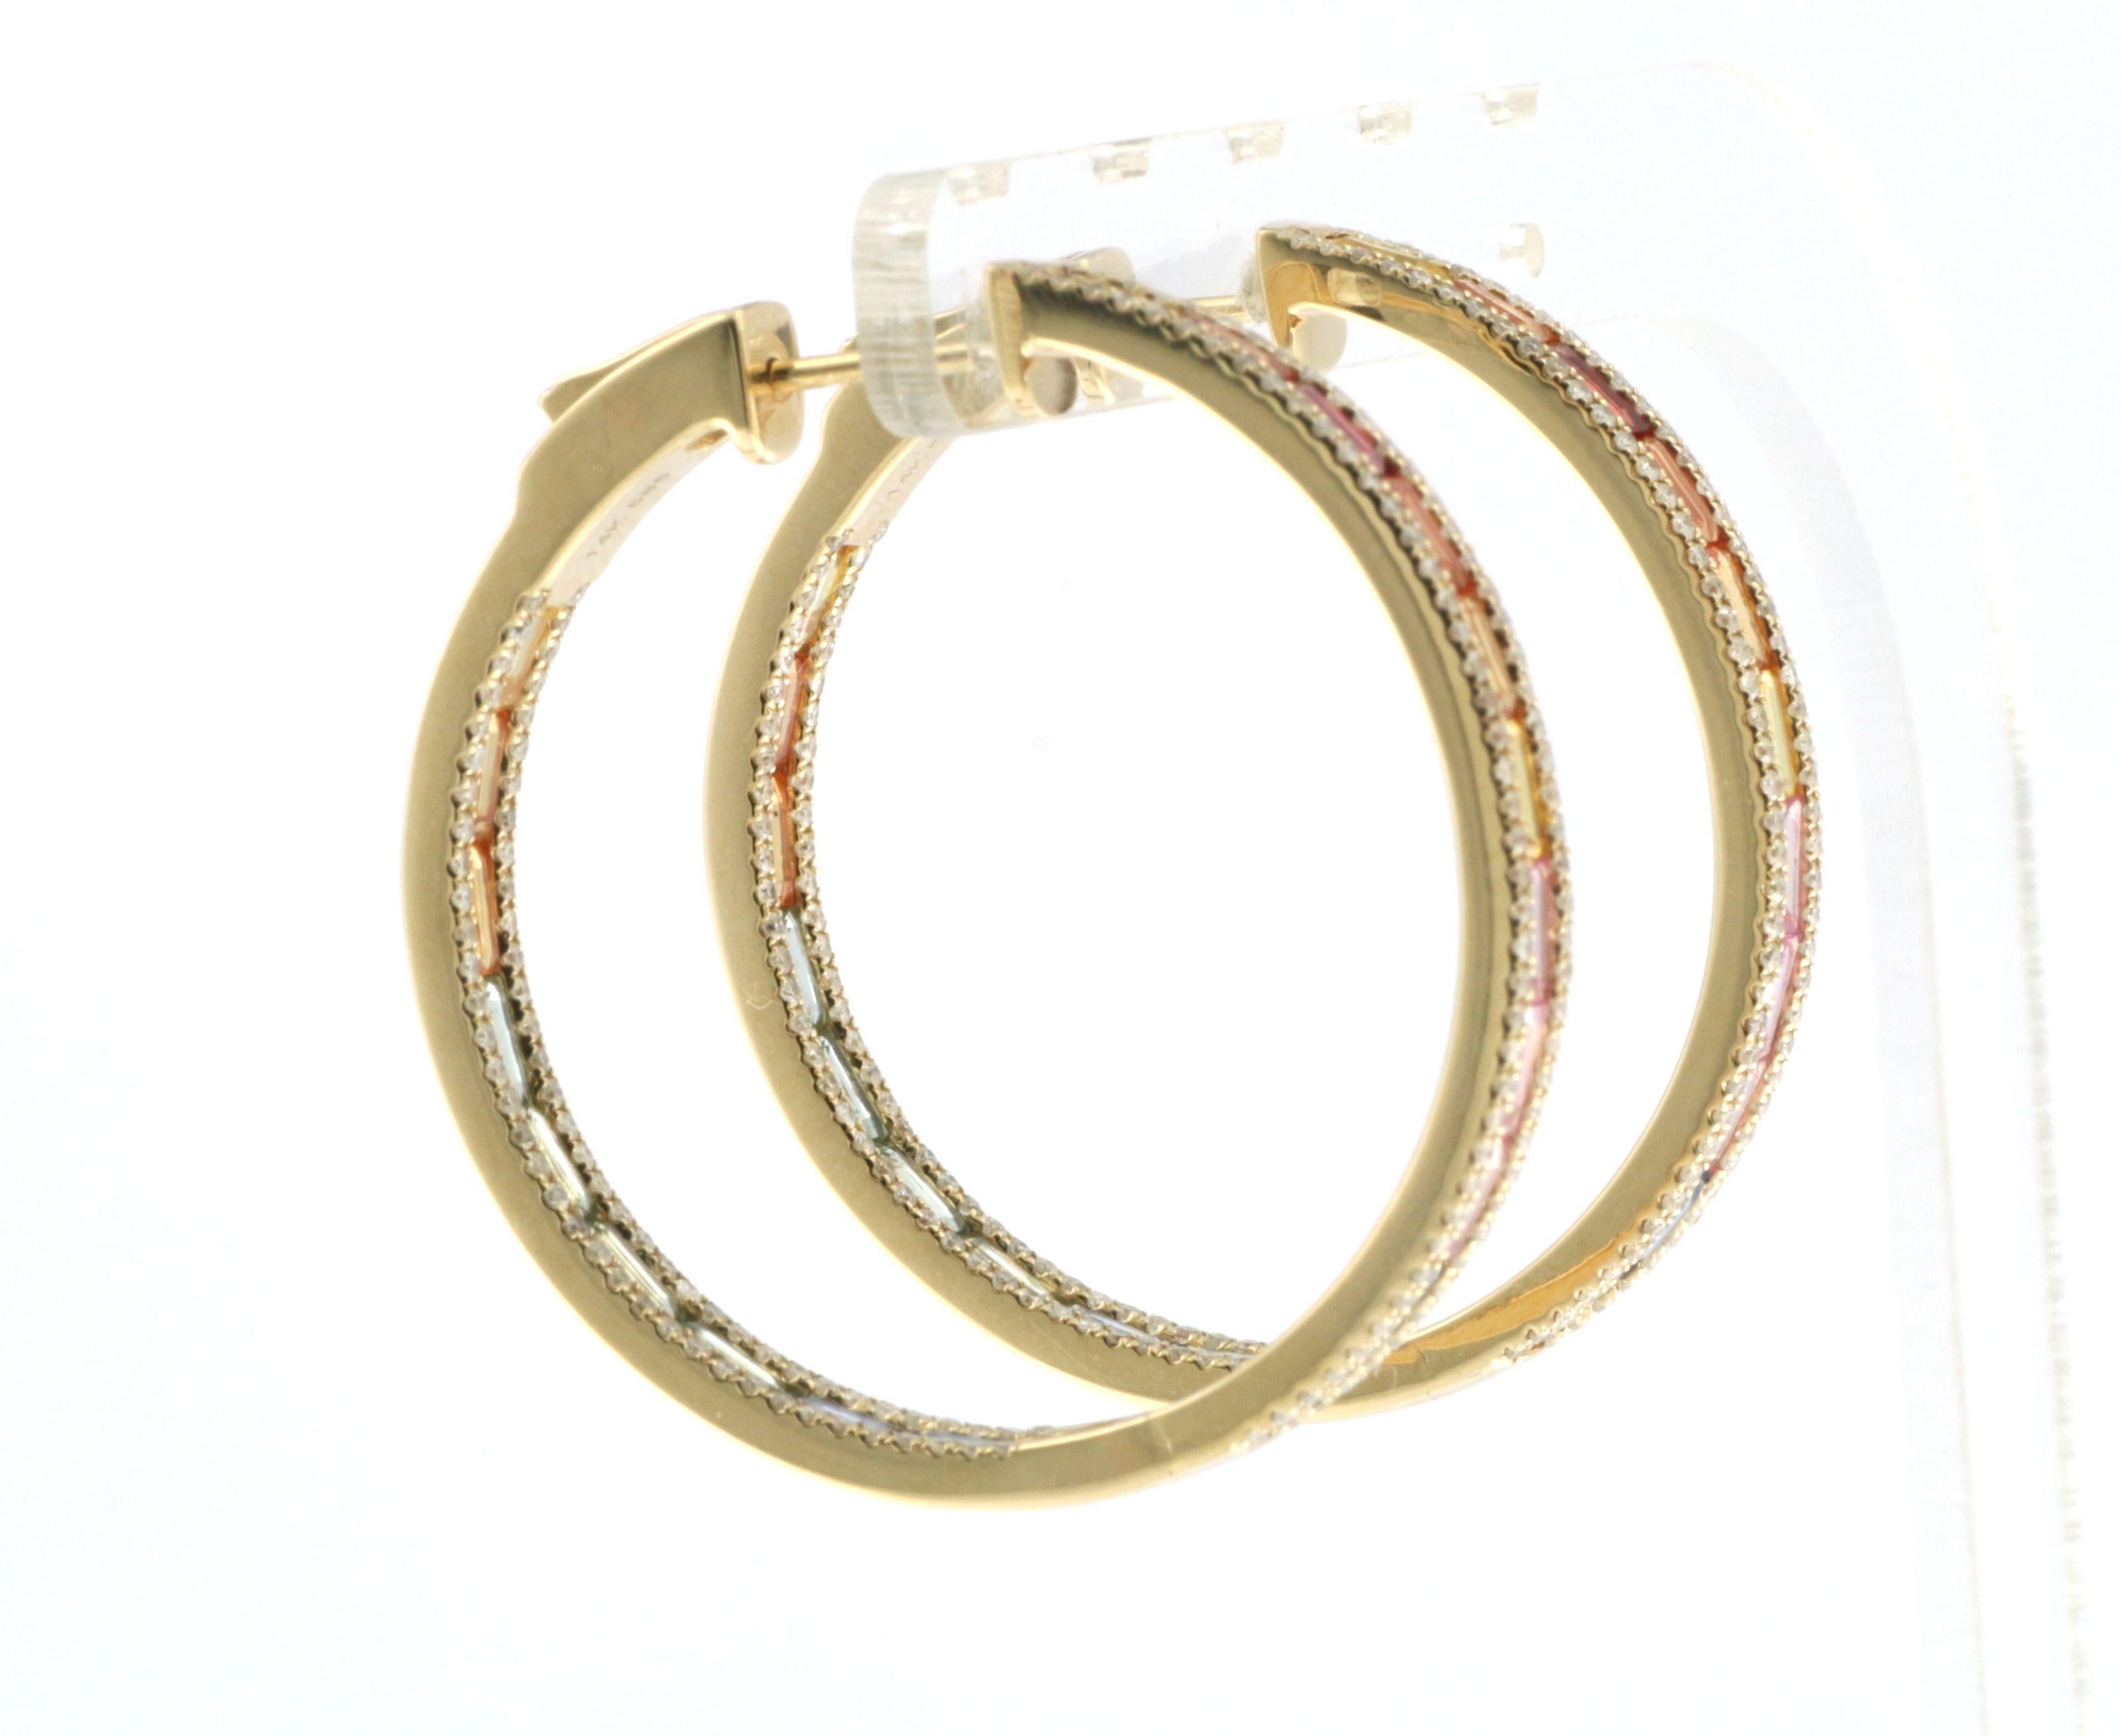 Tapered Baguette Rainbow Sapphire Diamond Hoop Earrings in 14 Karat Yellow Gold